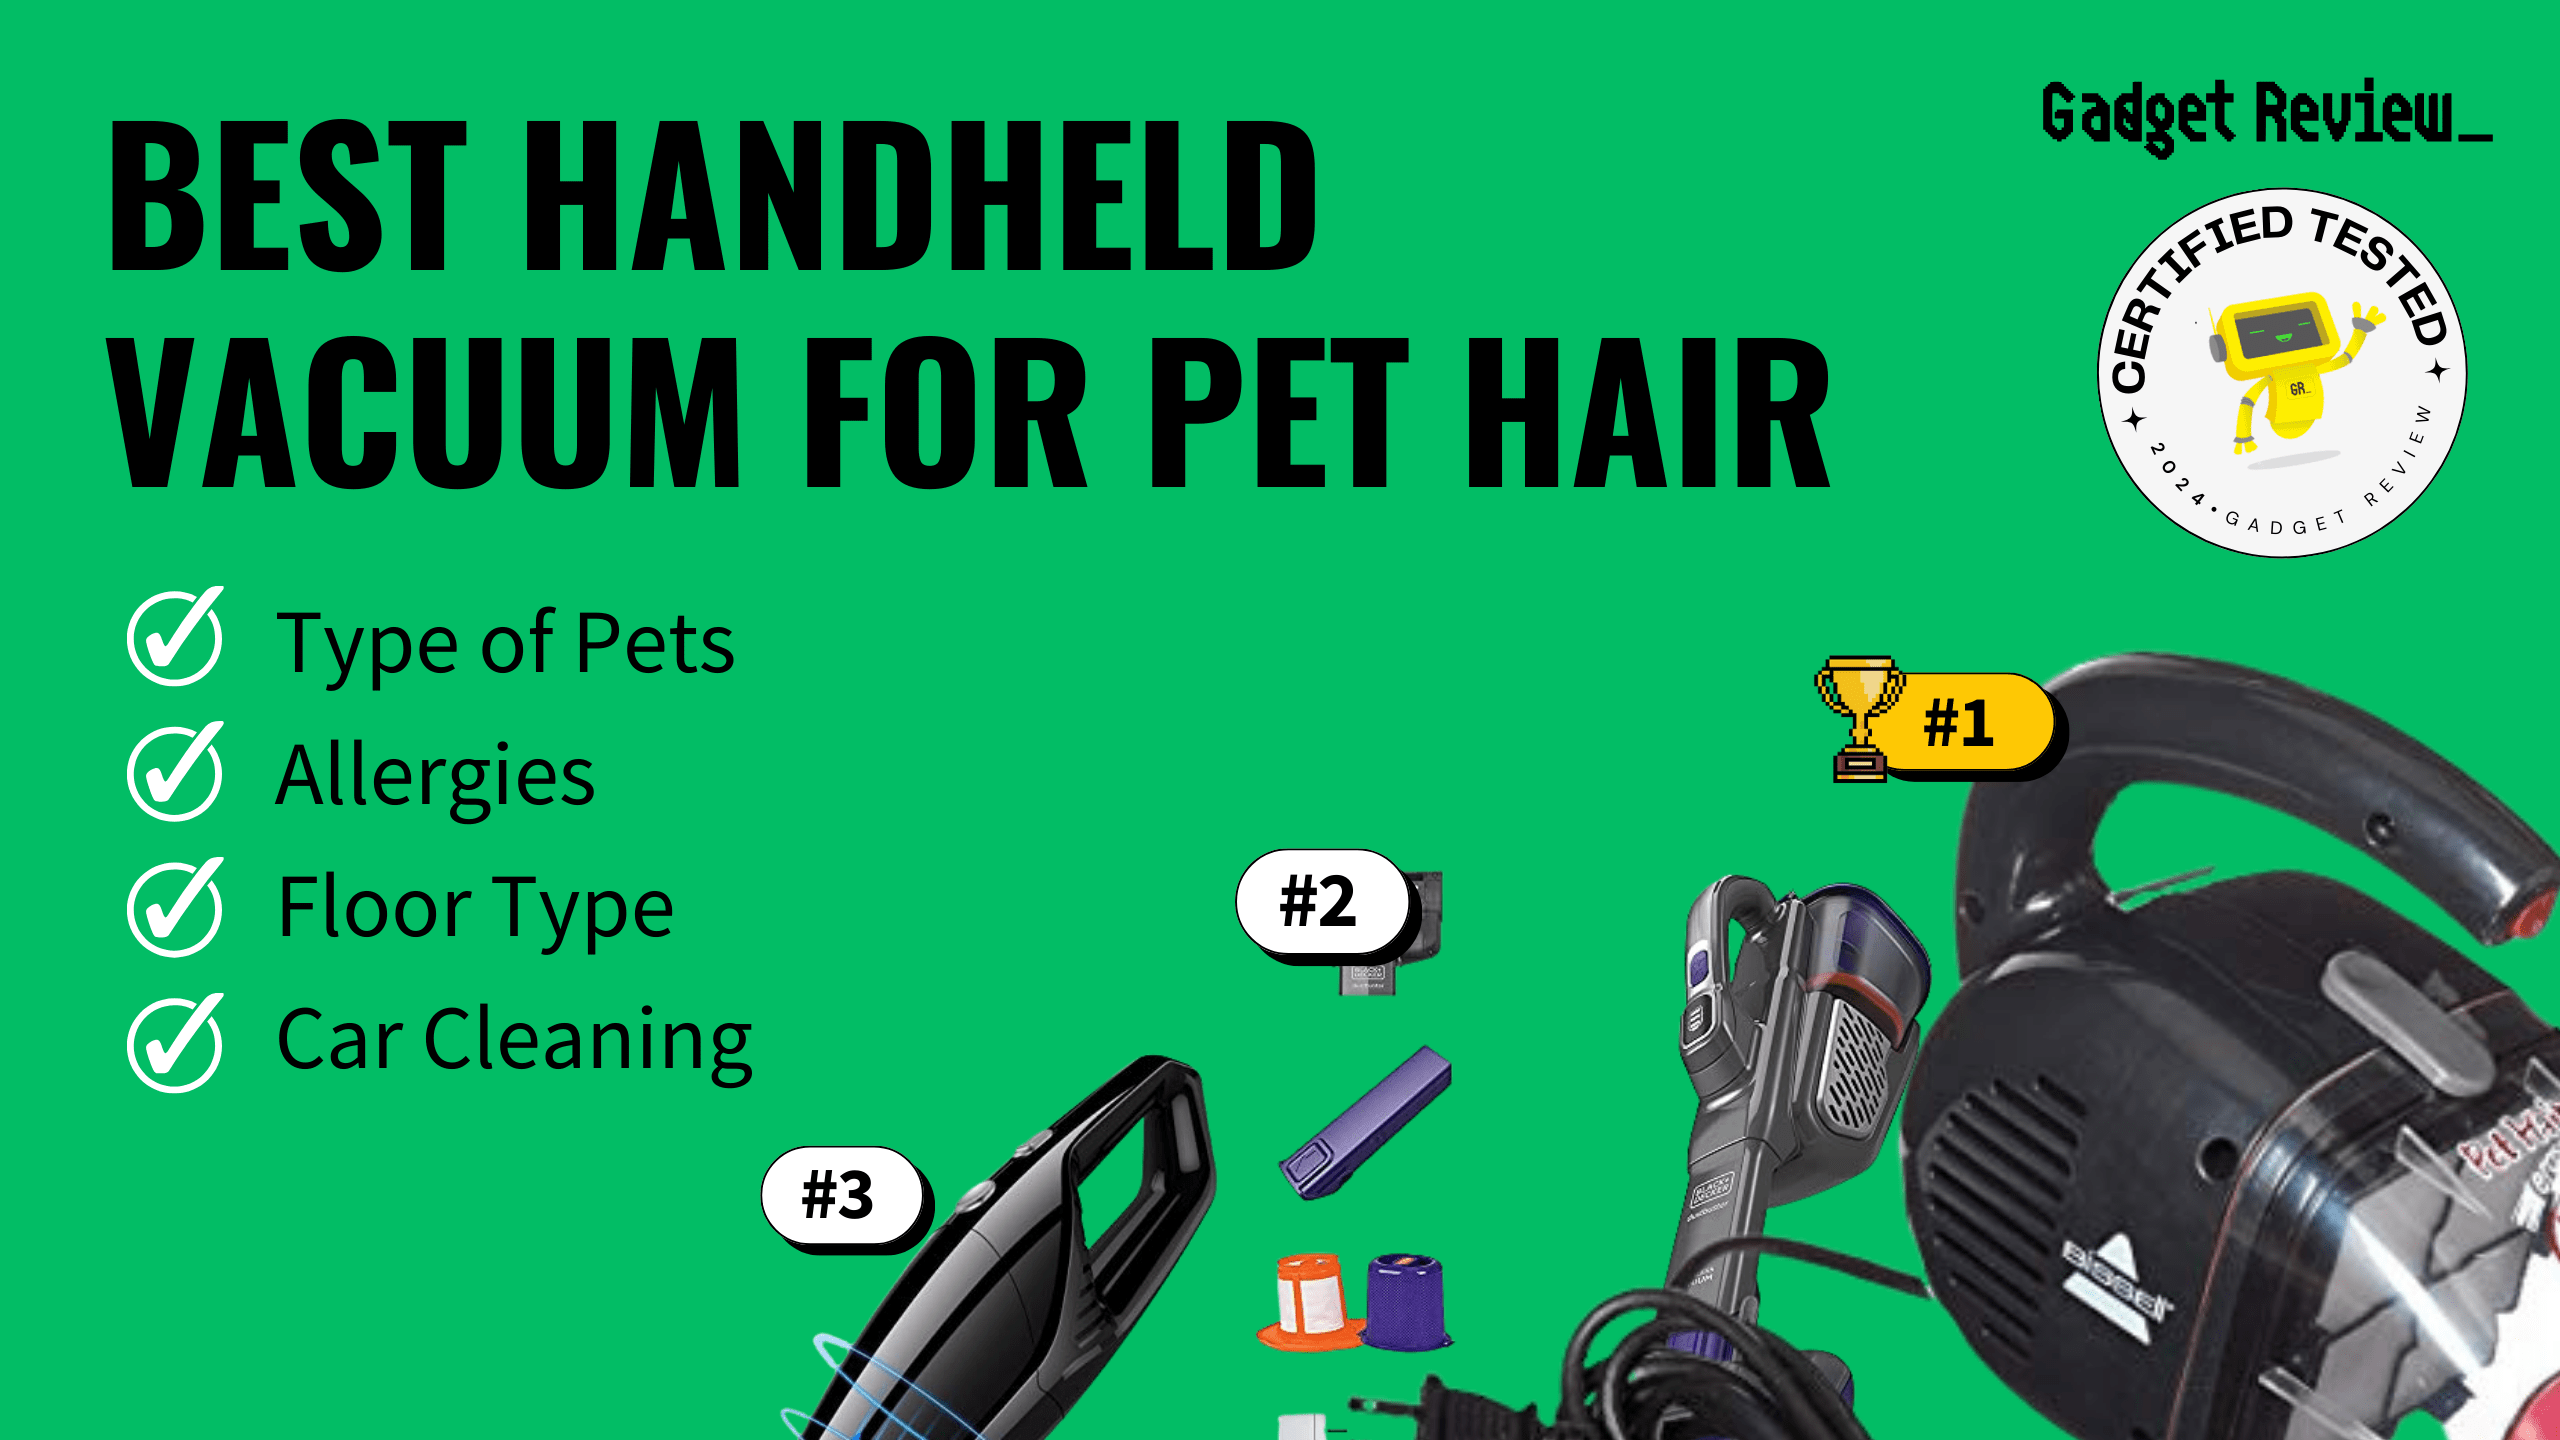 best handheld vacuum for pet hair guide that shows the top best vacuum cleaner model